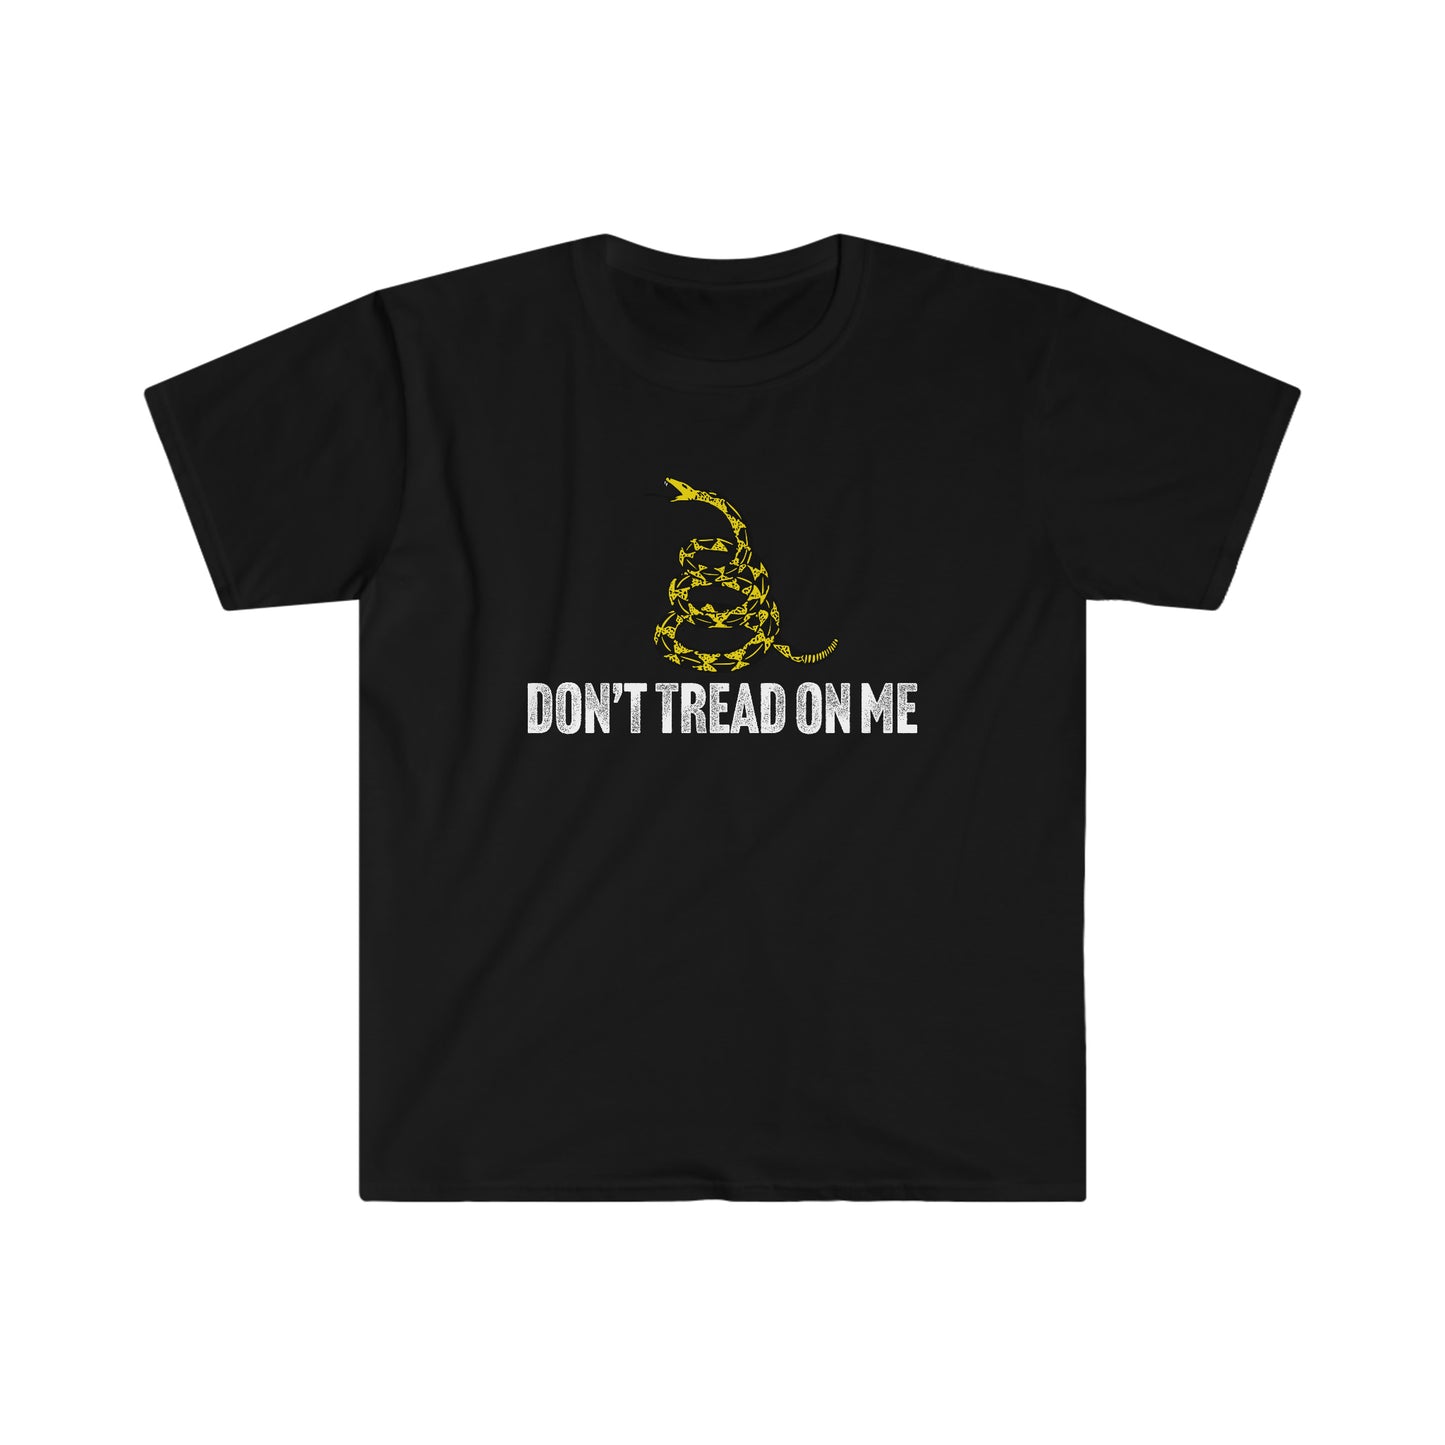 "Don't Tread on Me" Tee